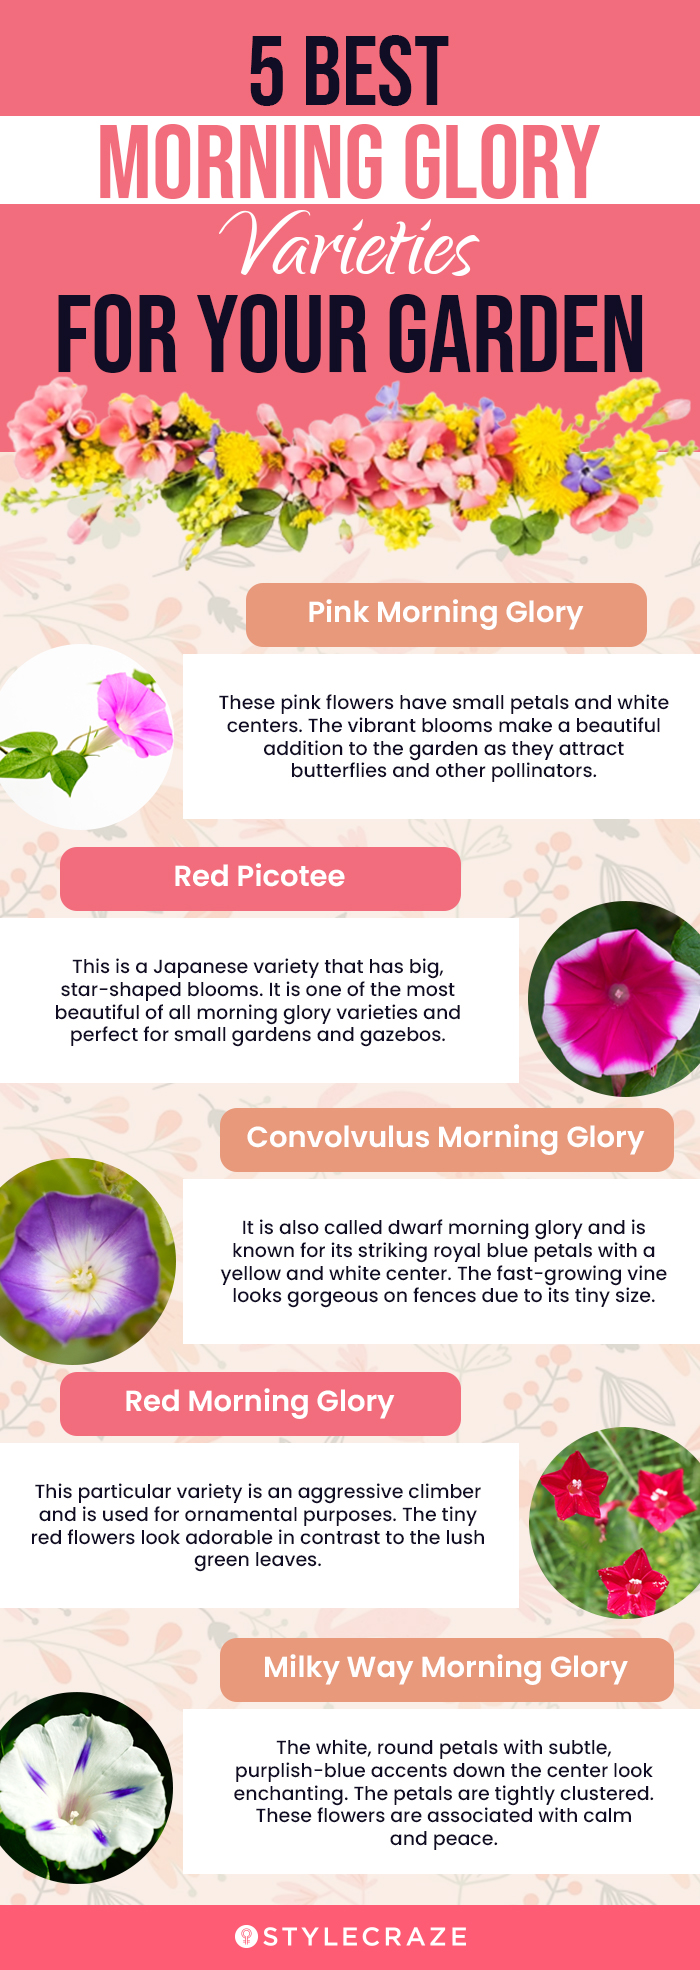 5 best morning glory varieties for your garden (infographic)